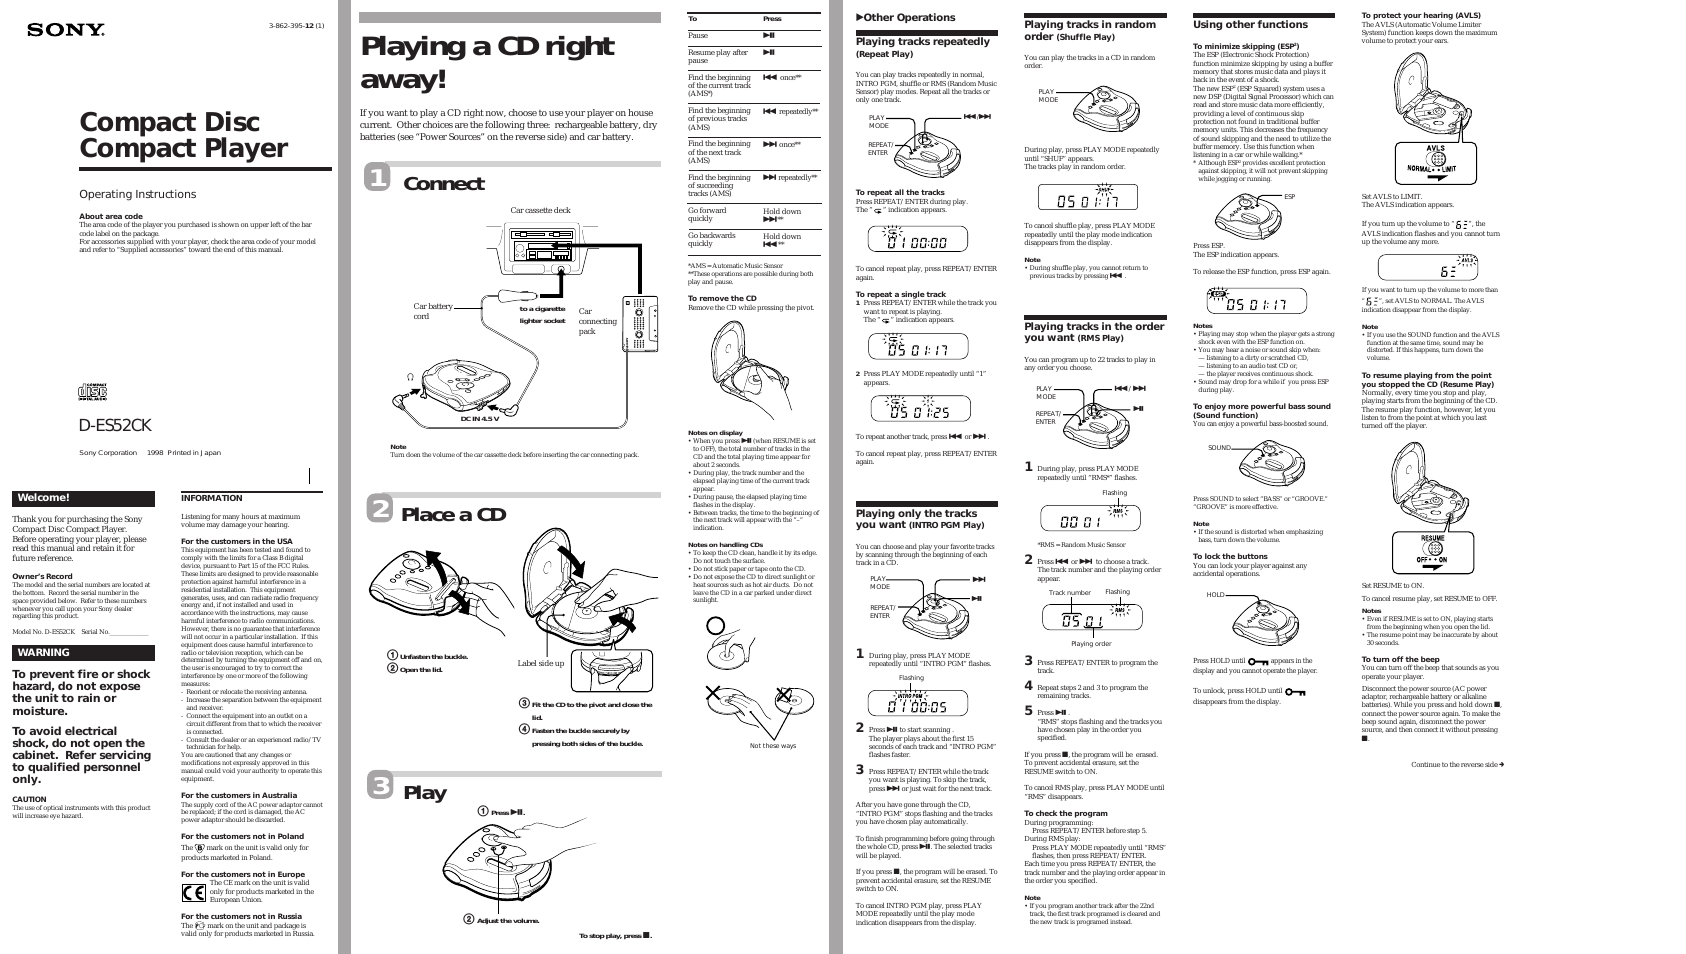 CD Walkman D-ES52CK (Page 1)